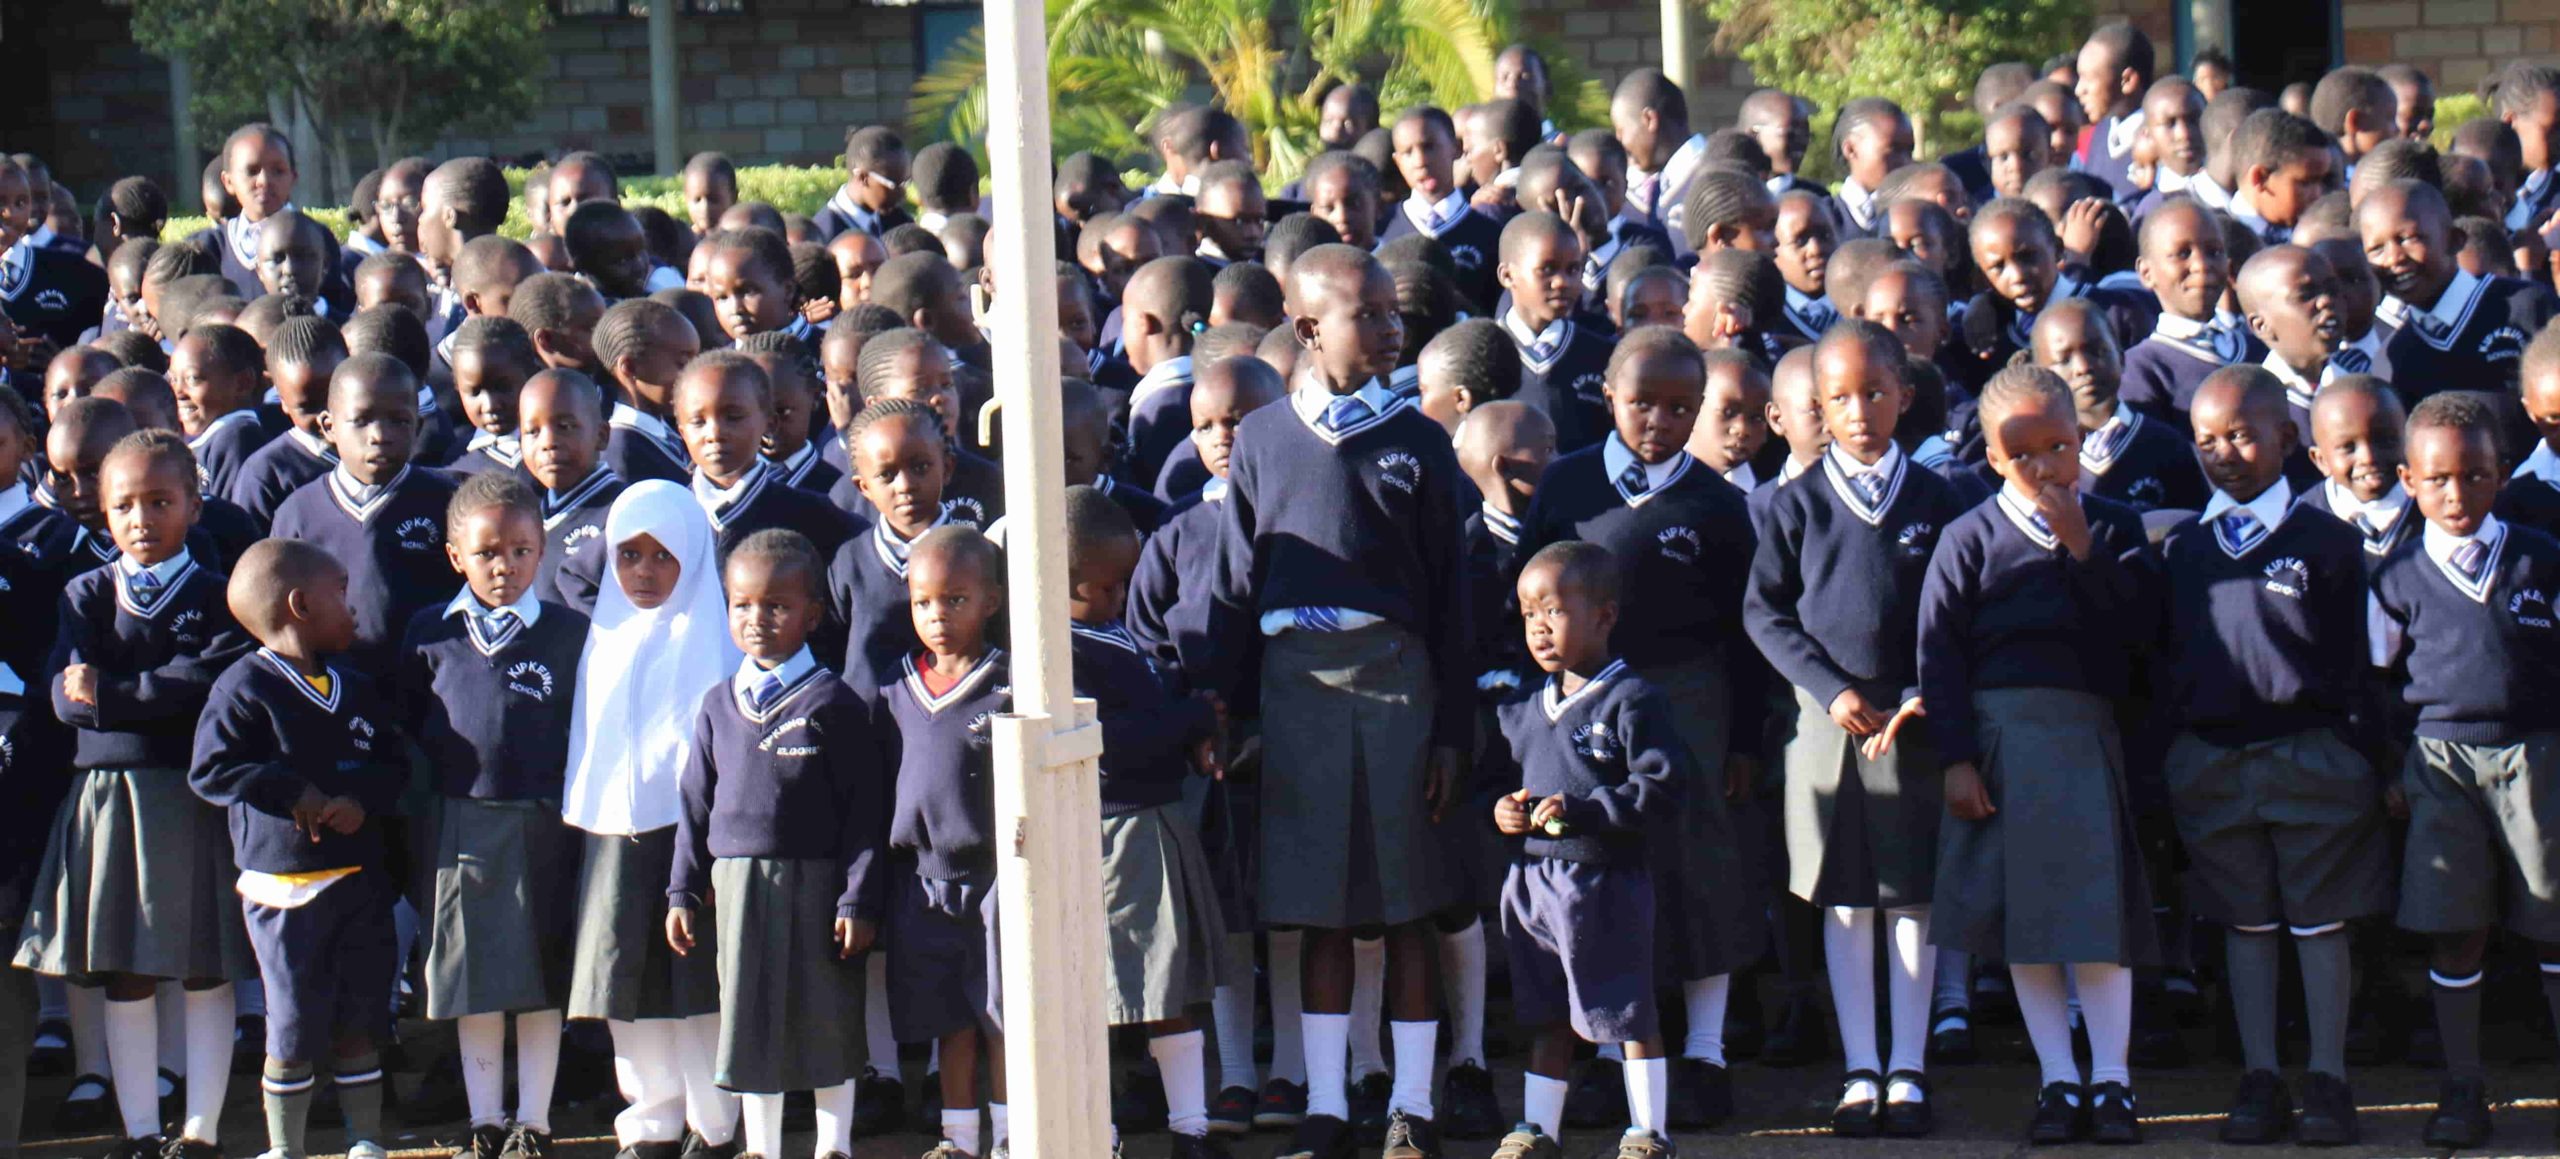 BWA -- Kipkeino Primary School students outside